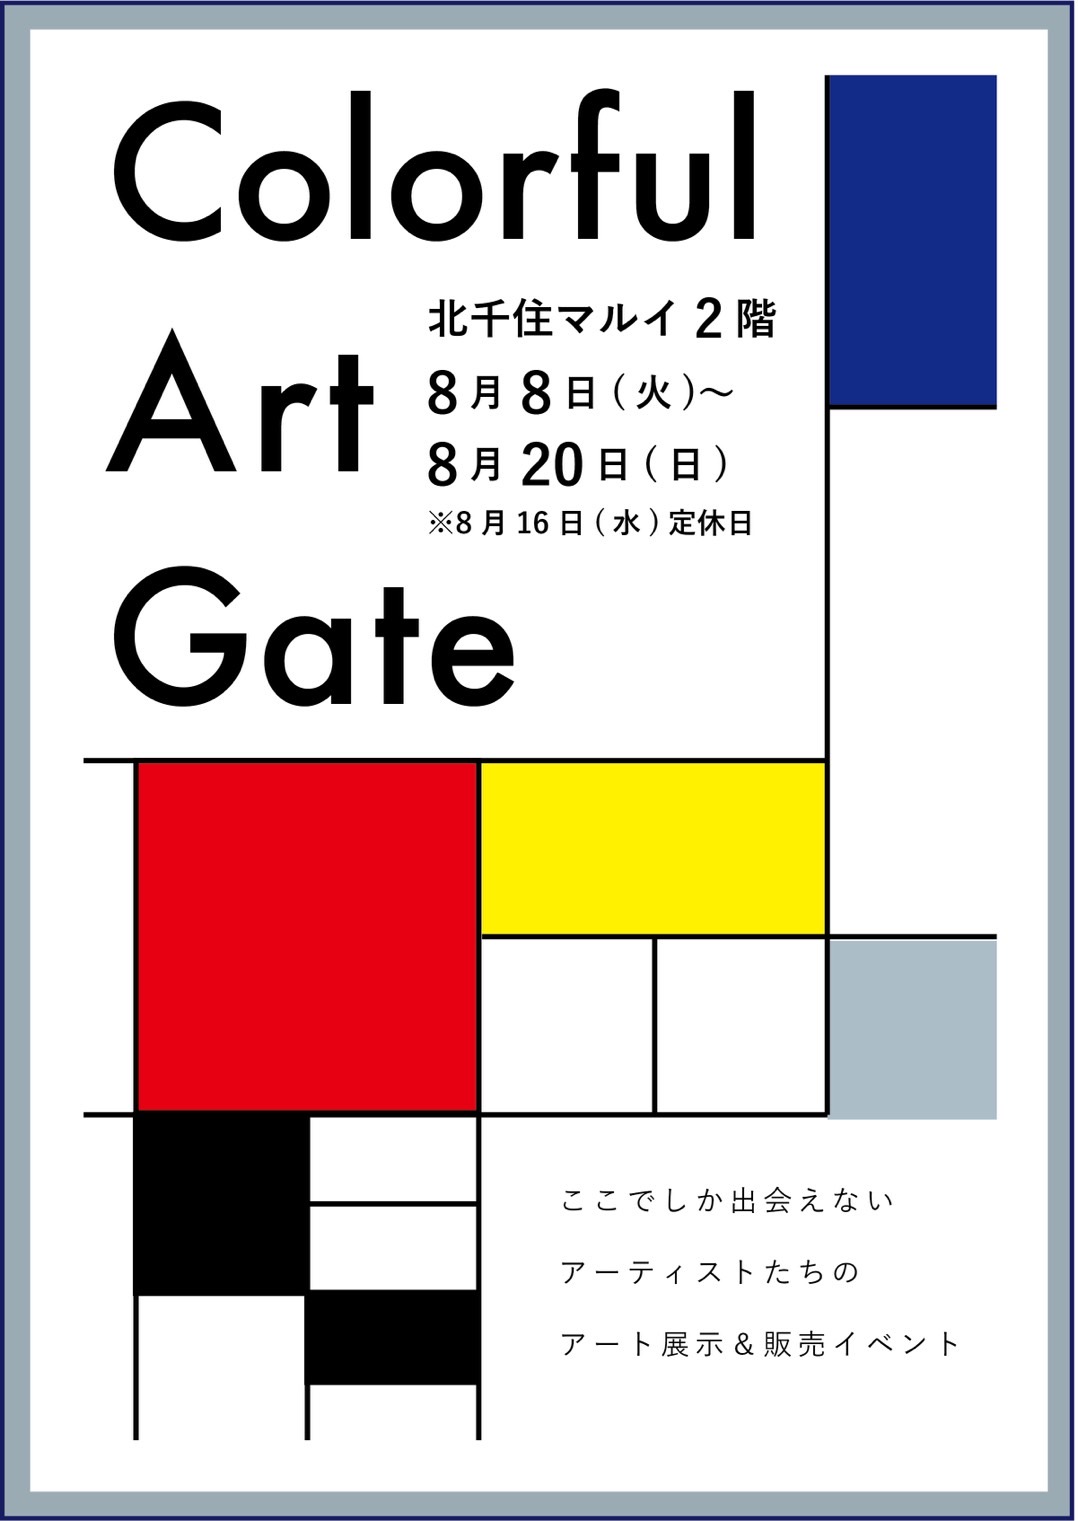 Colorful Art Gate(マルイ北千住)に参加します！